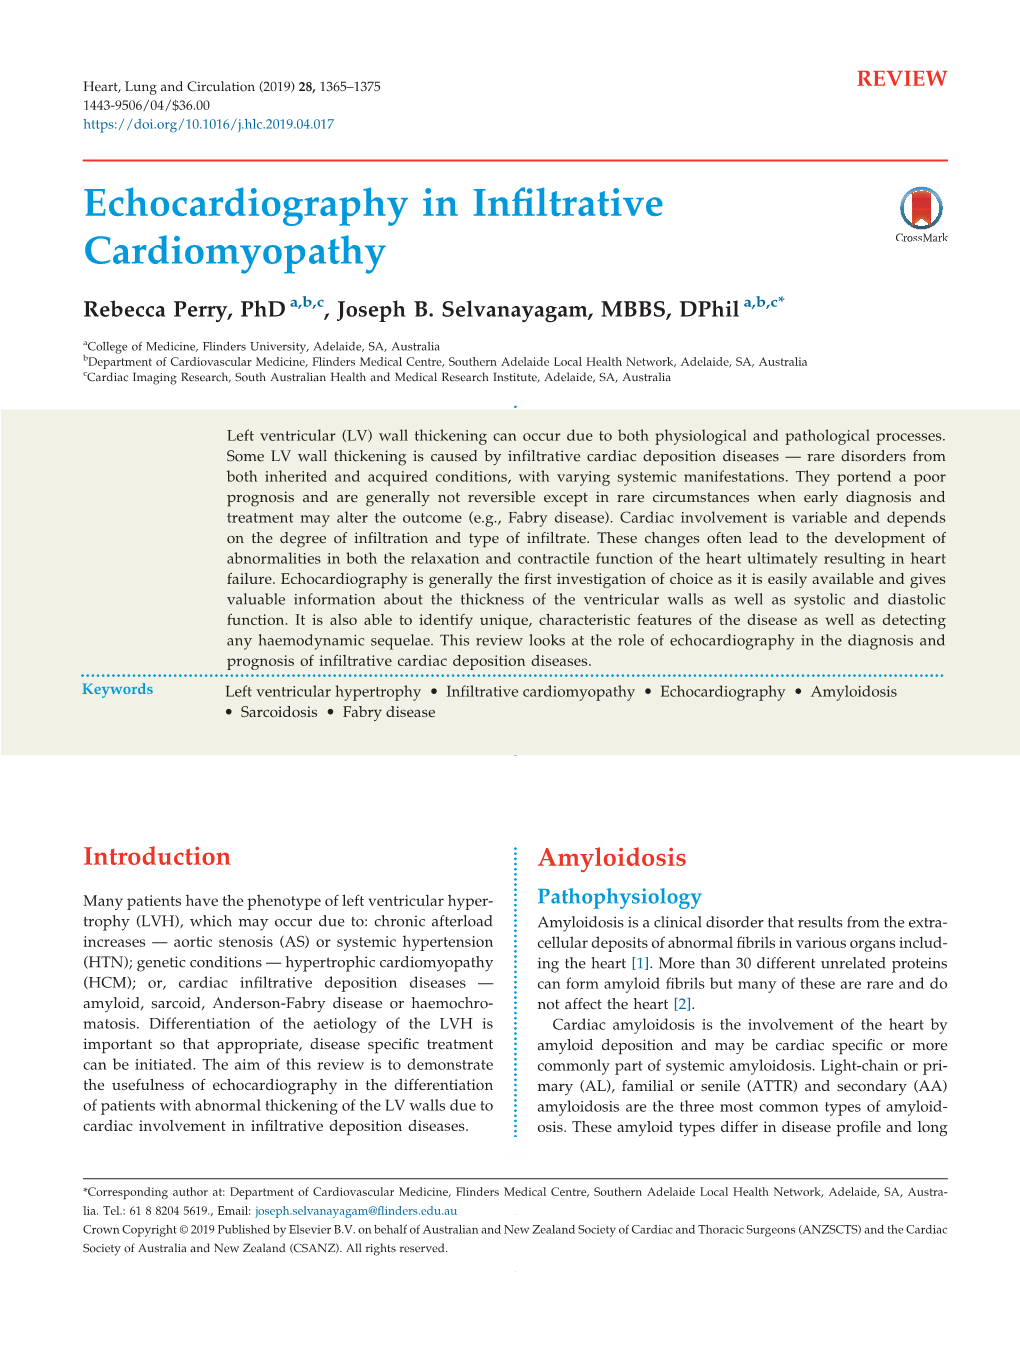 Echocardiography in Infiltrative Cardiomyopathy